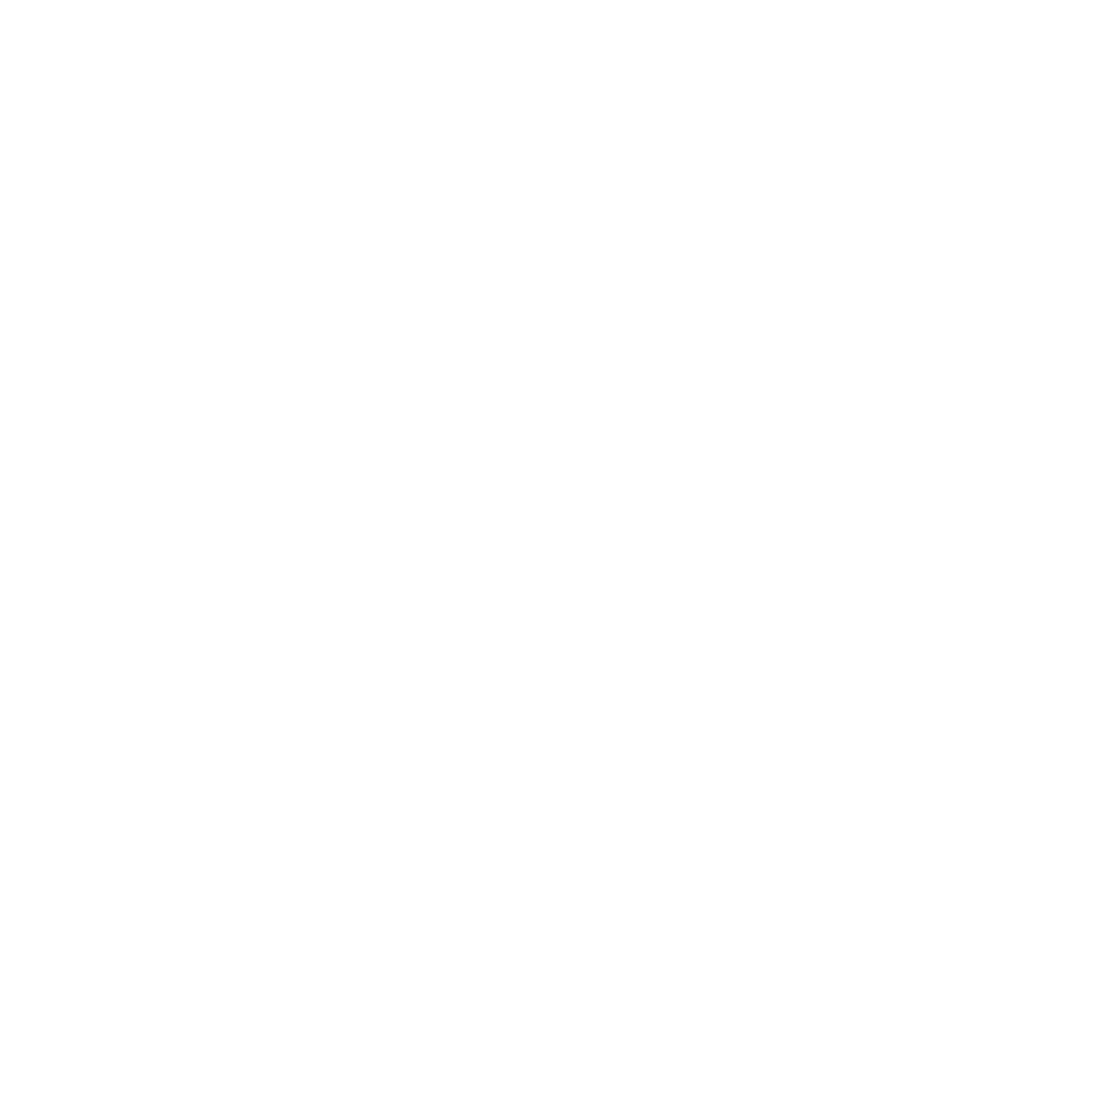 Screaming Eagle Productions Ltd